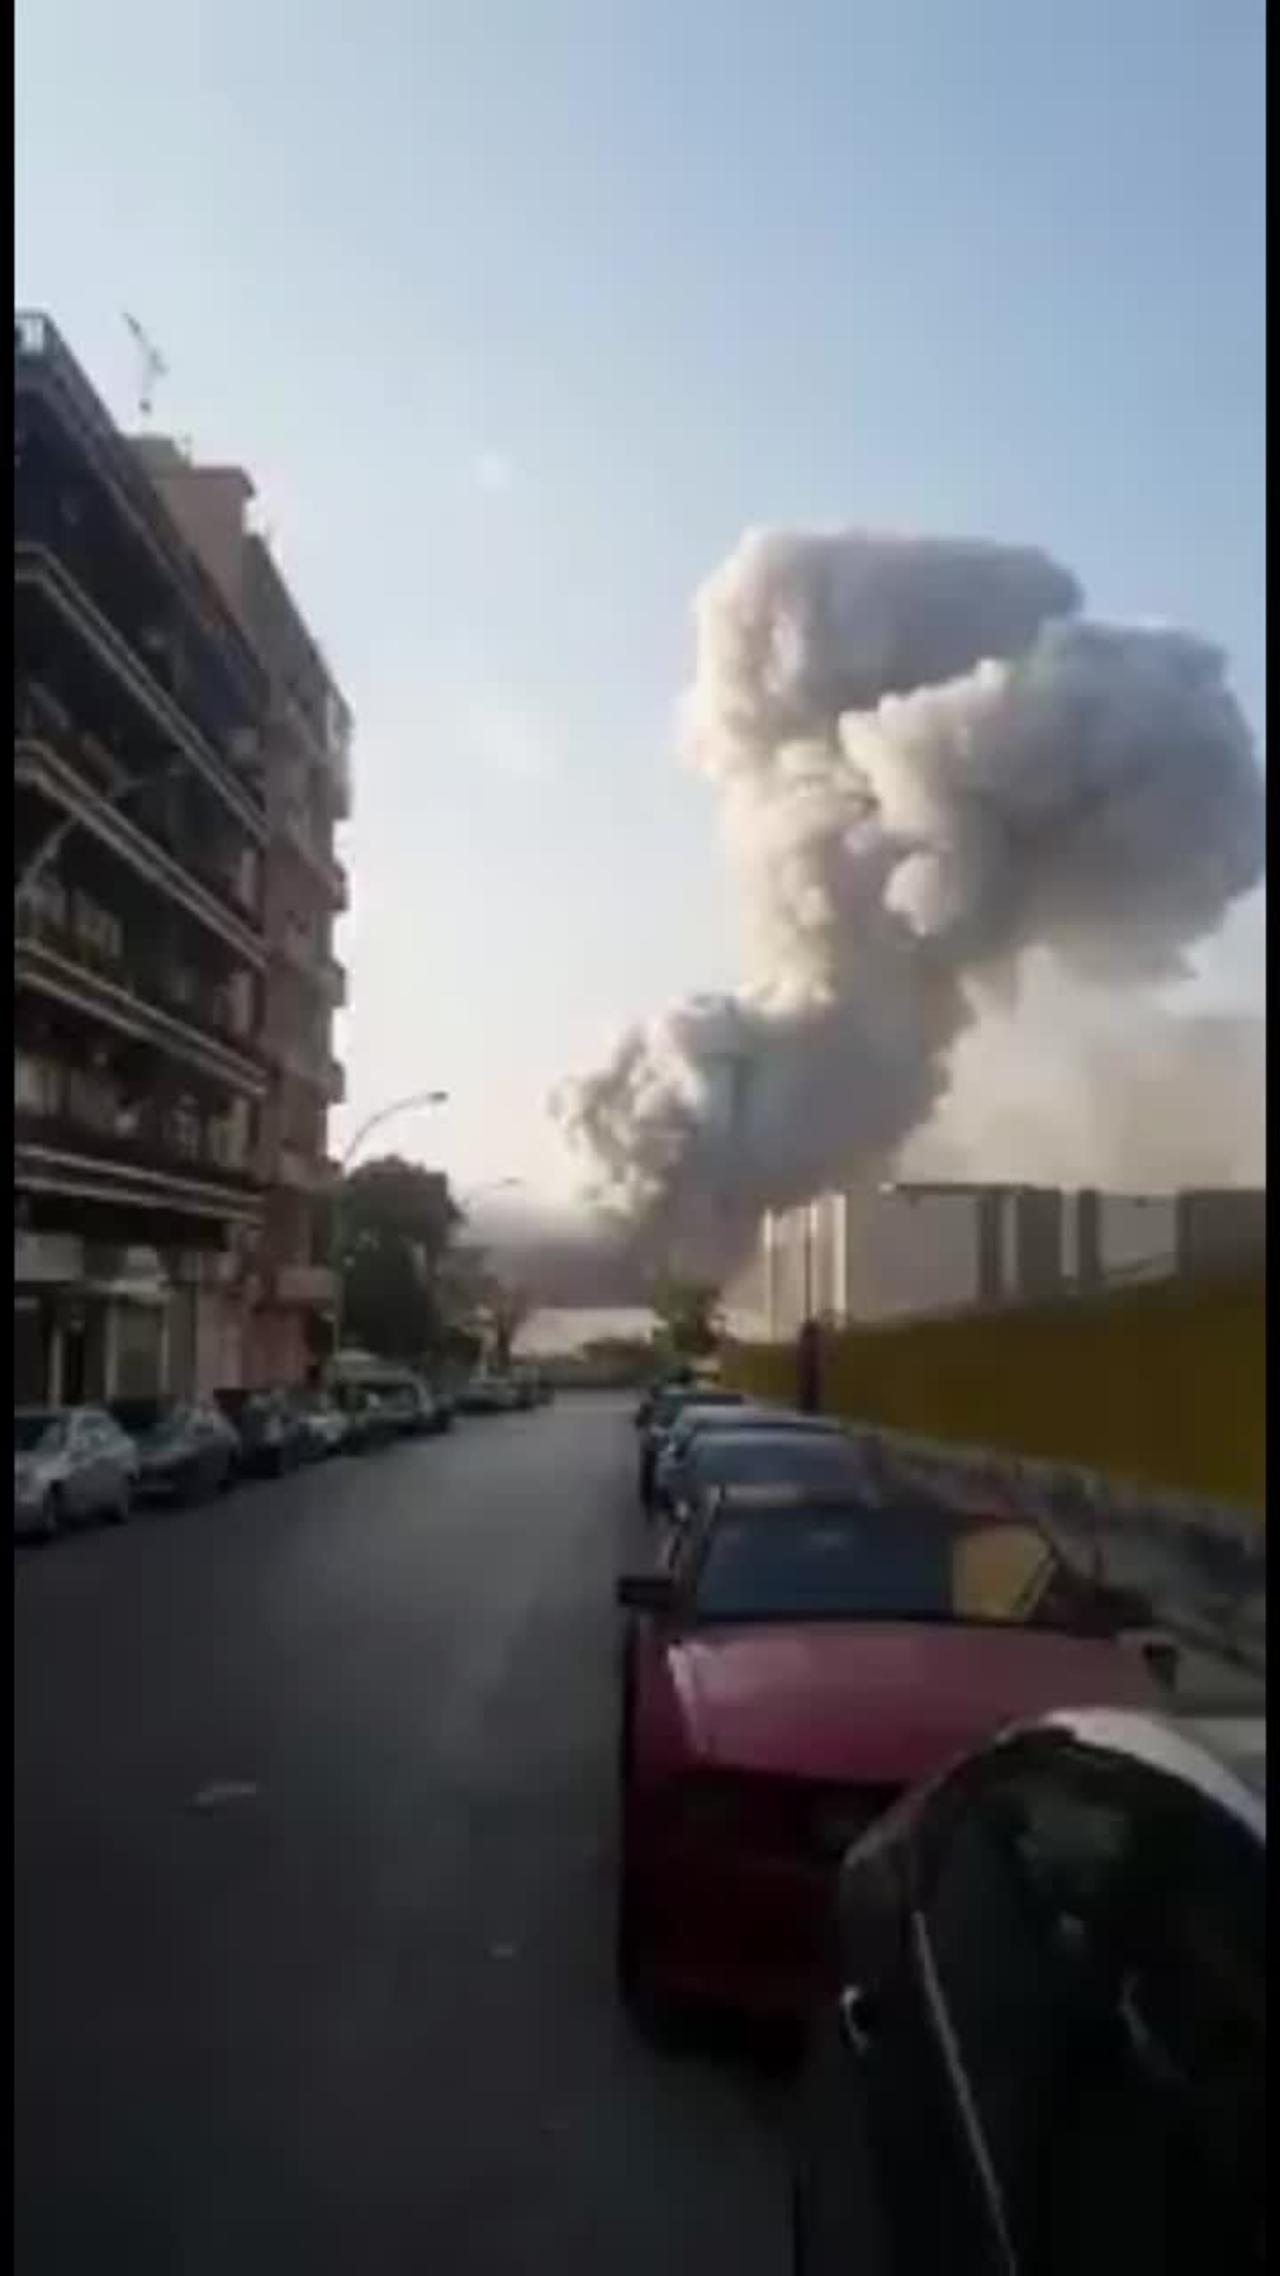 BEIRUT 2020 - Explosion